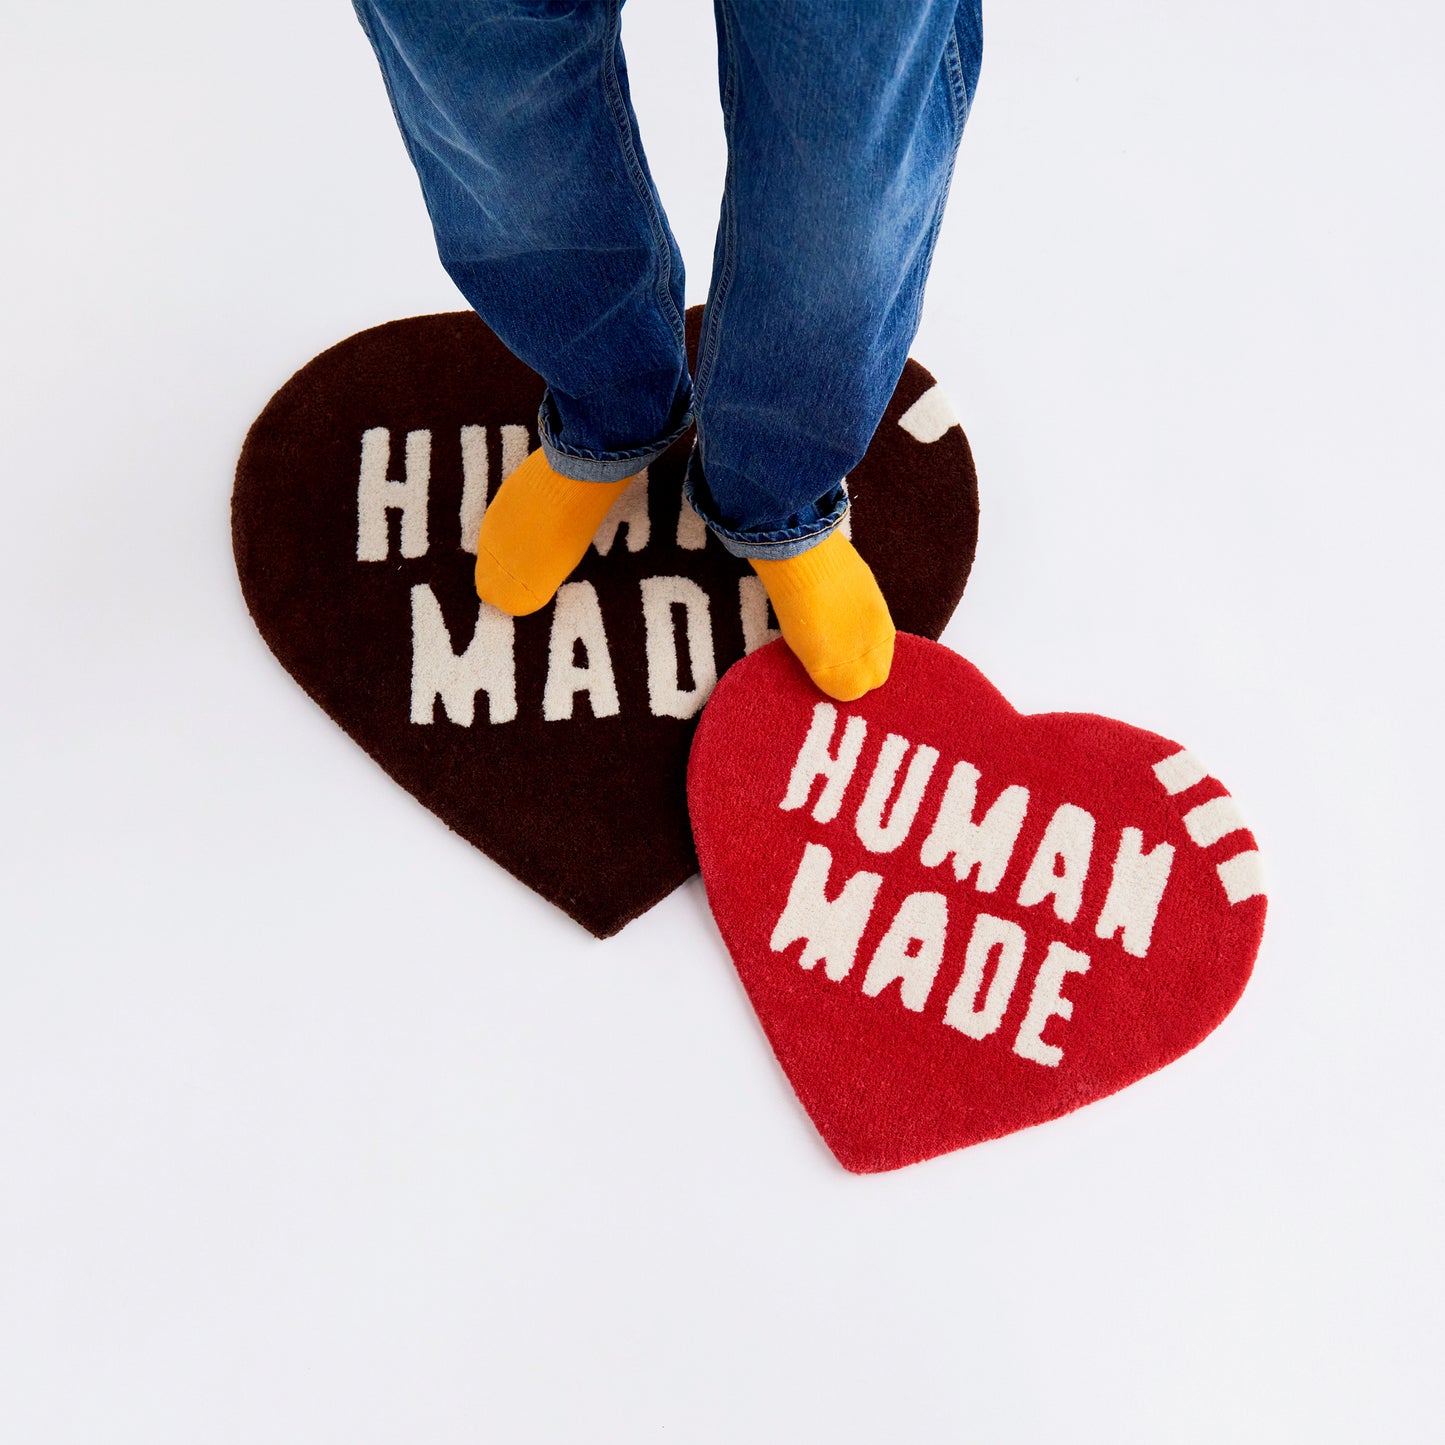 humanmade HEART RUG SMALL即購入⭕️